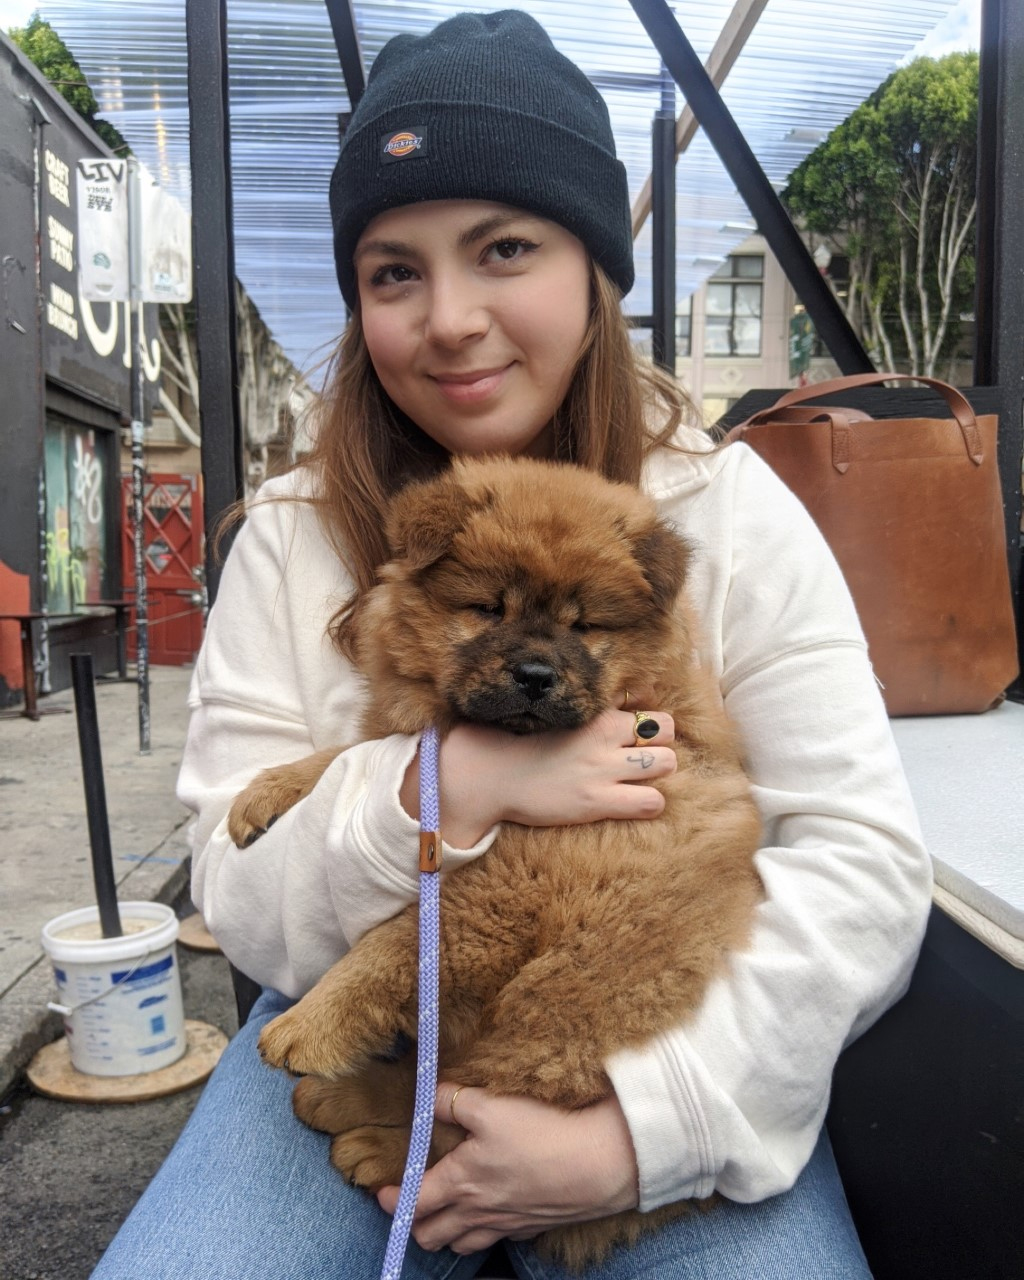 PHOTO: Angie Avera and her chow chow puppy "Maple." Photo courtesy of Angie Avera.